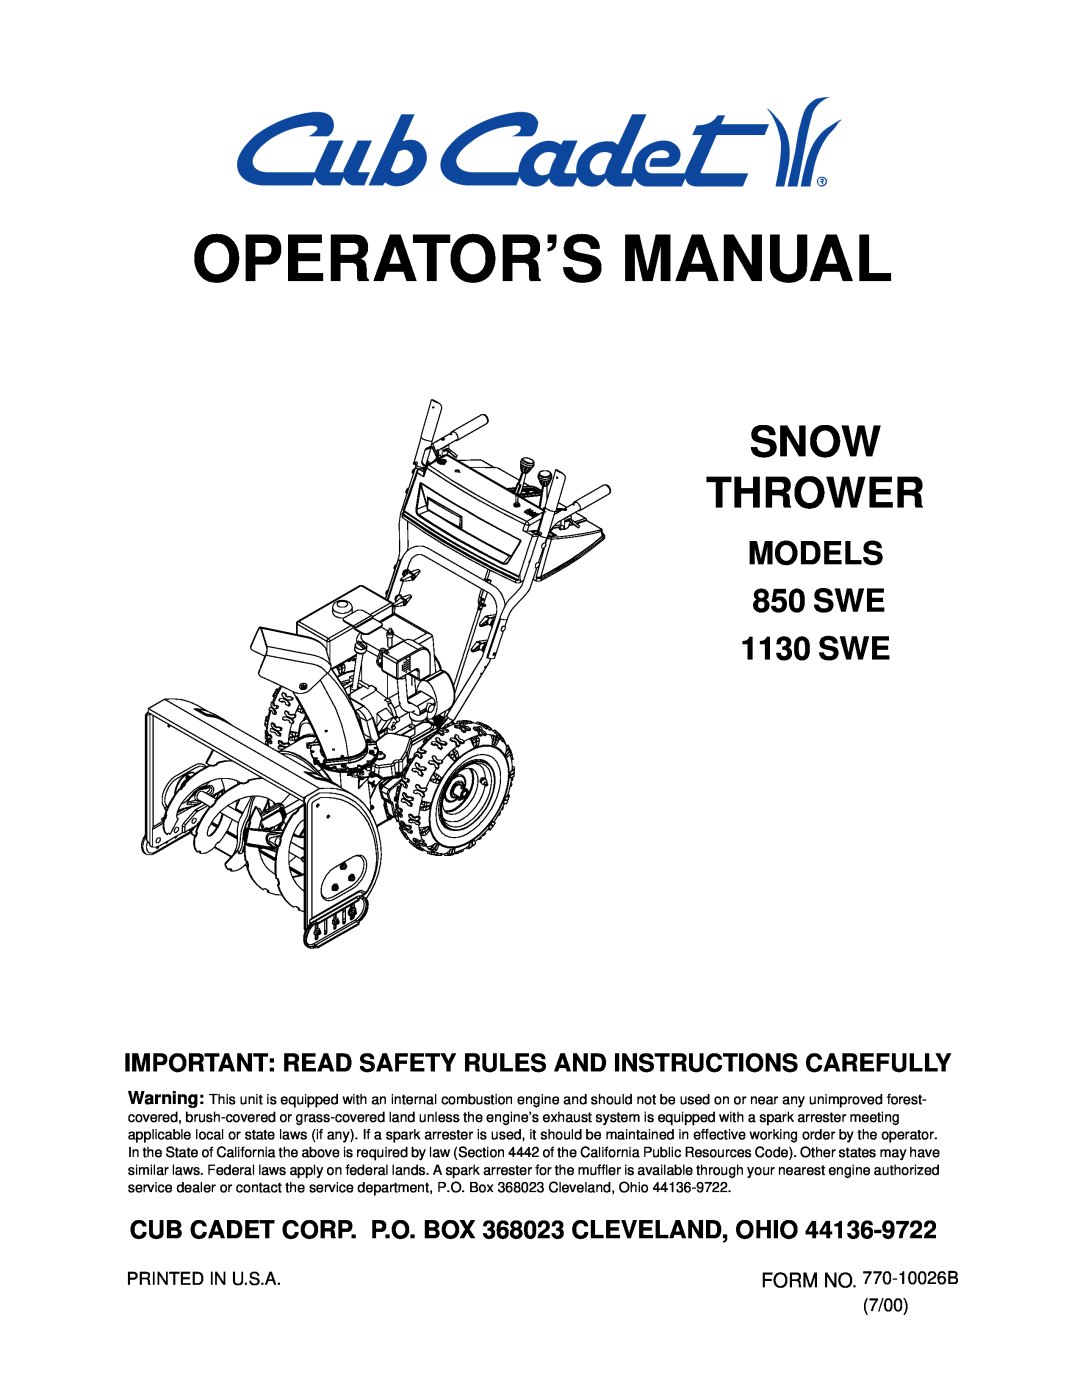 Cub Cadet manual Operator’S Manual, Snow Thrower, MODELS 850 SWE 1130 SWE 